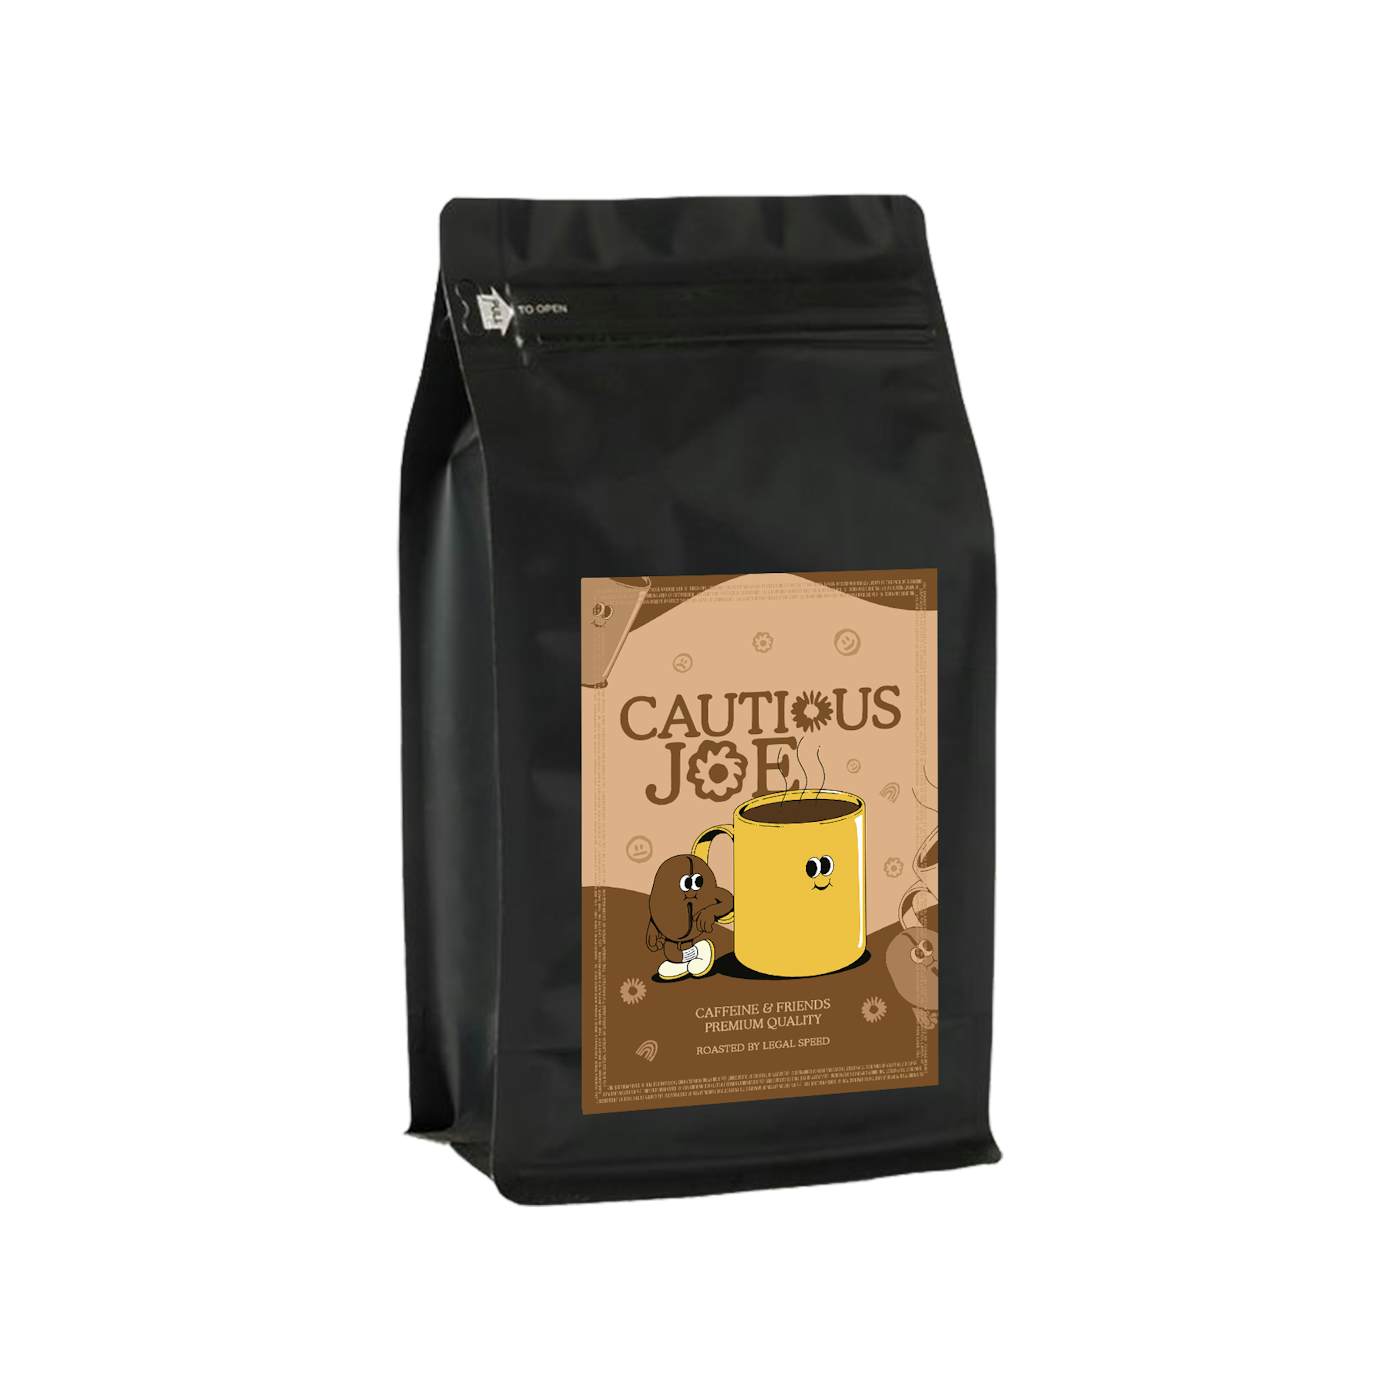 Cautious Clay Cautious Joe Coffee